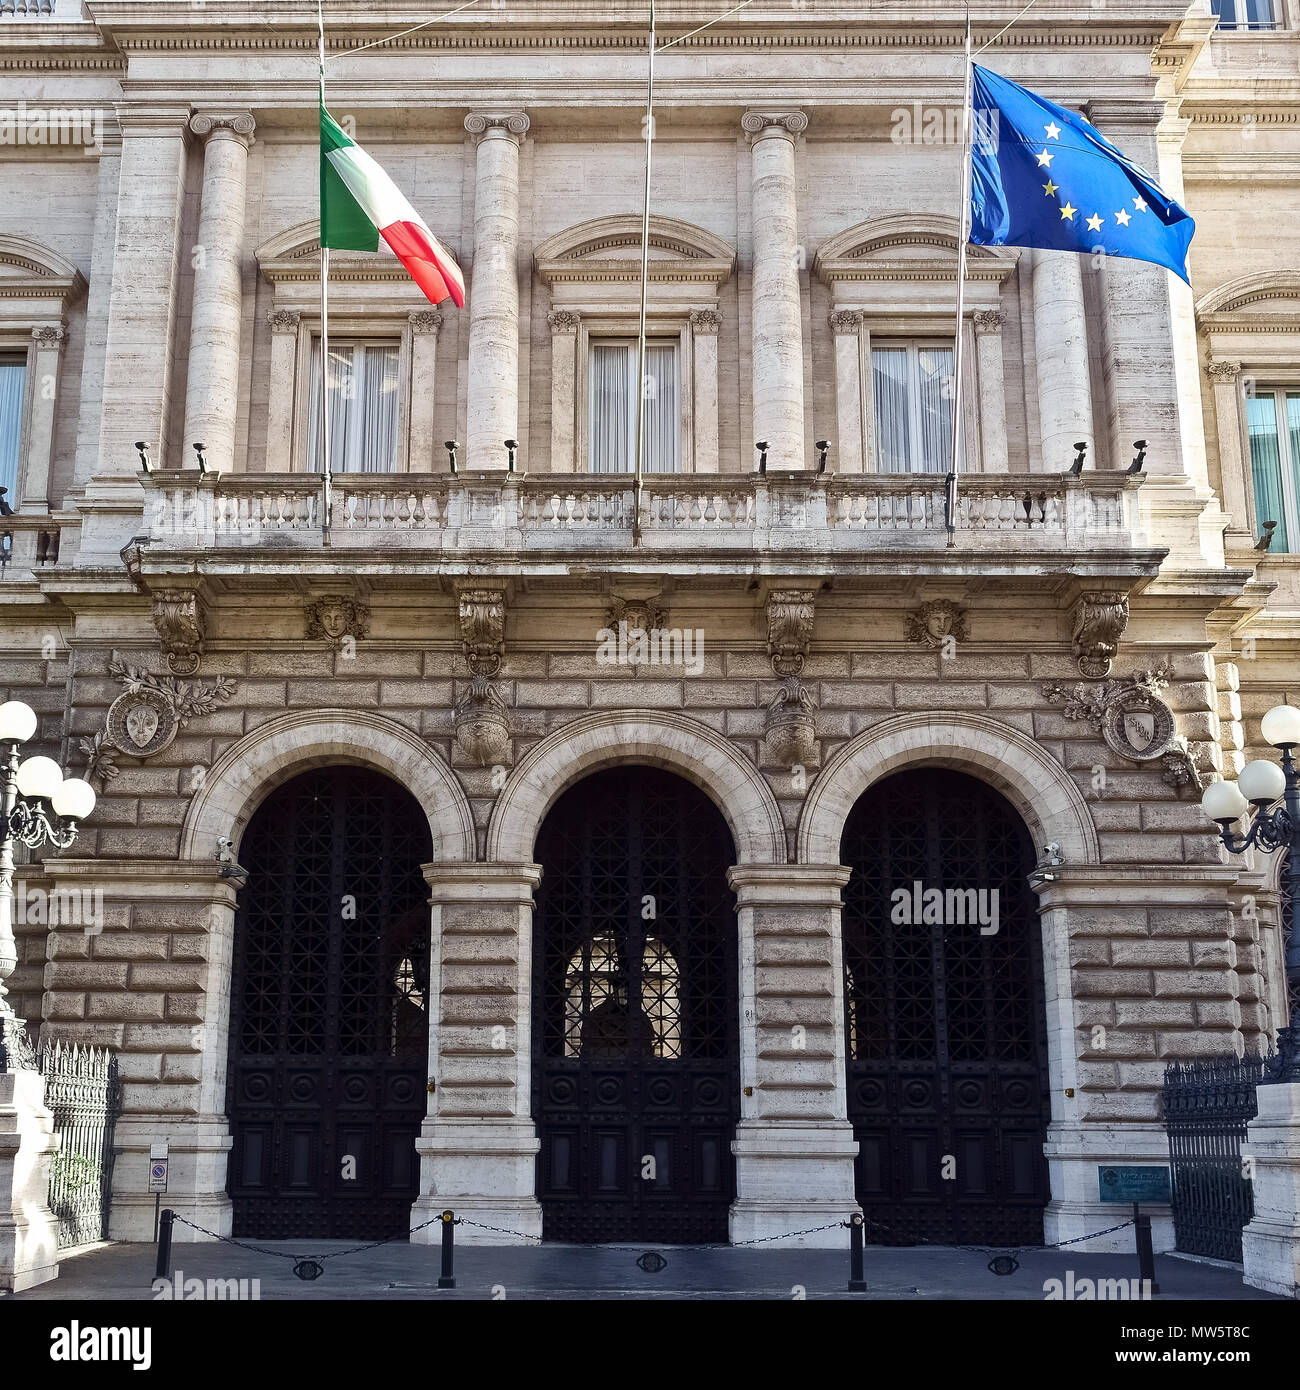 Banco central de italia fotografías e imágenes de alta resolución - Alamy